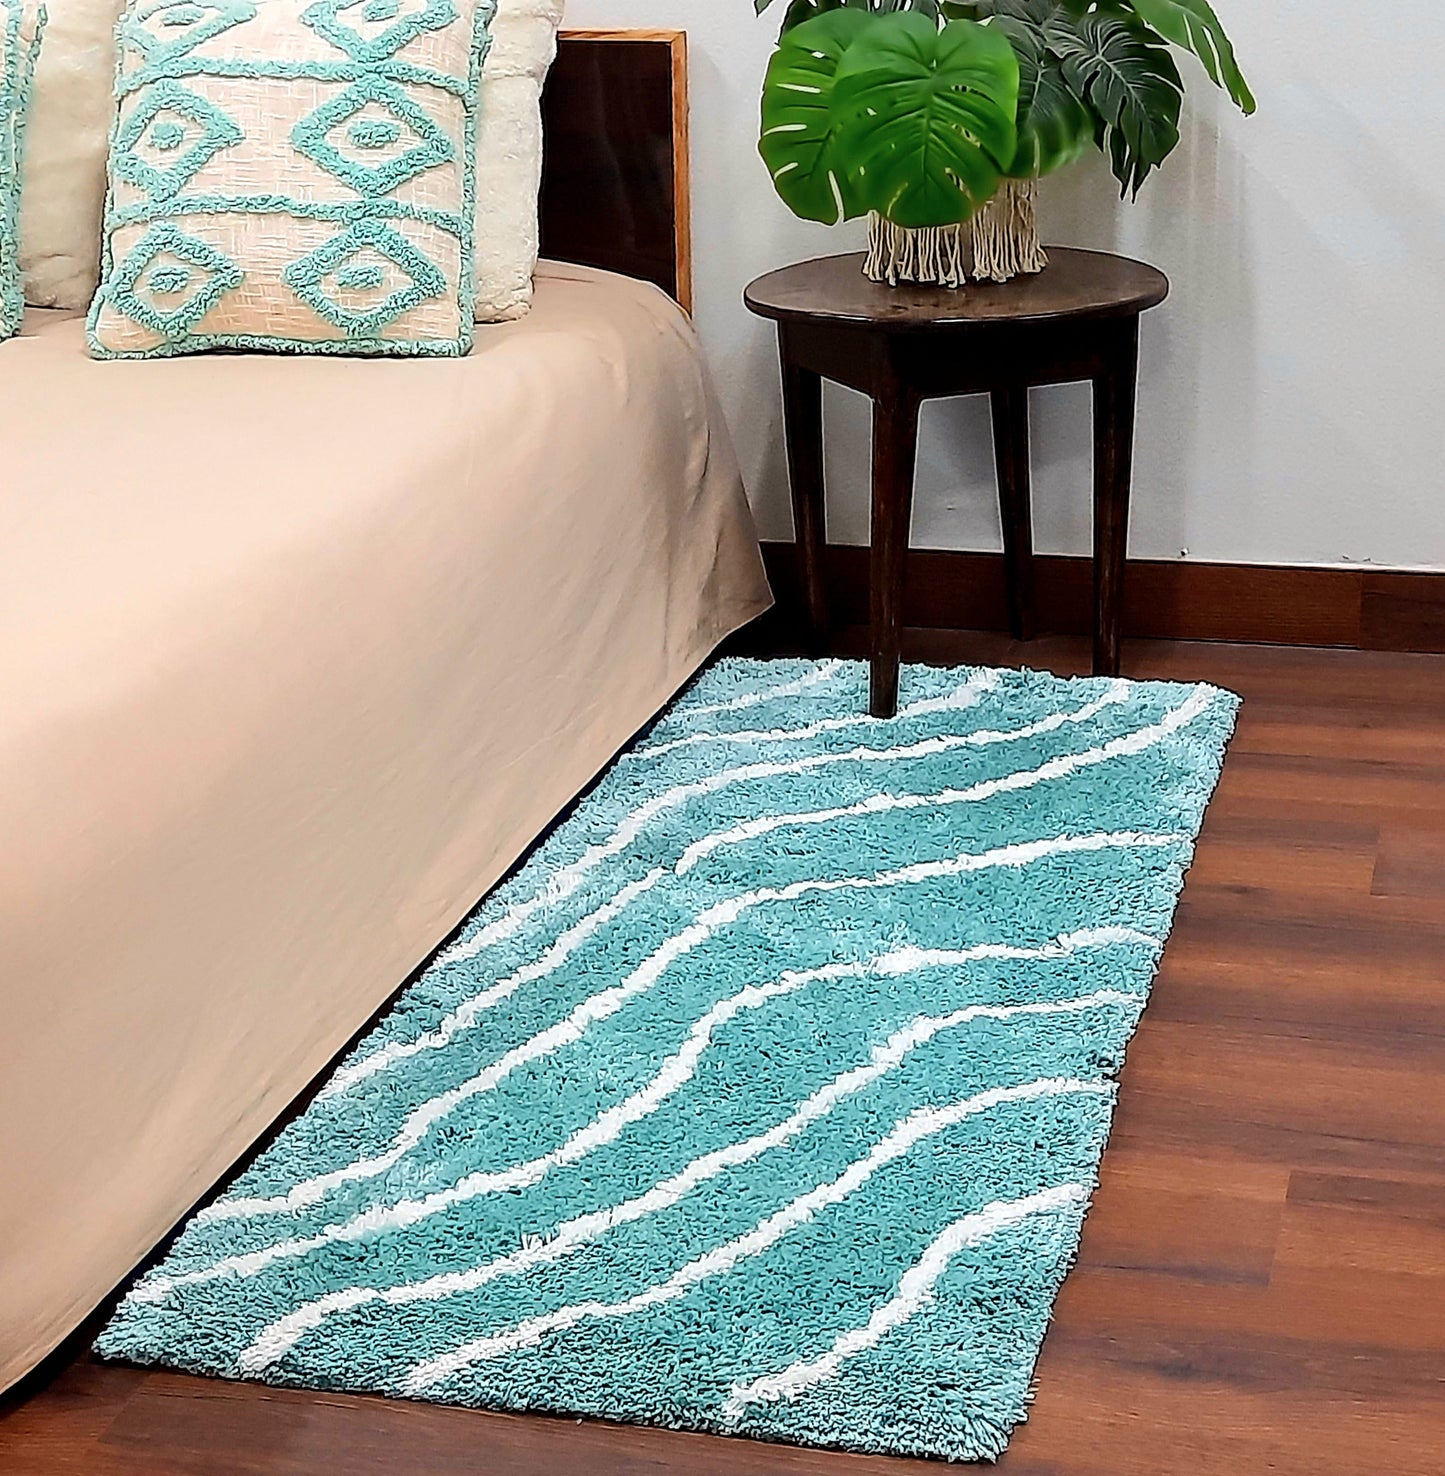 Handloom Shaggy Aqua Carpet With White Wave Design /Bedside Runners by Avioni Home